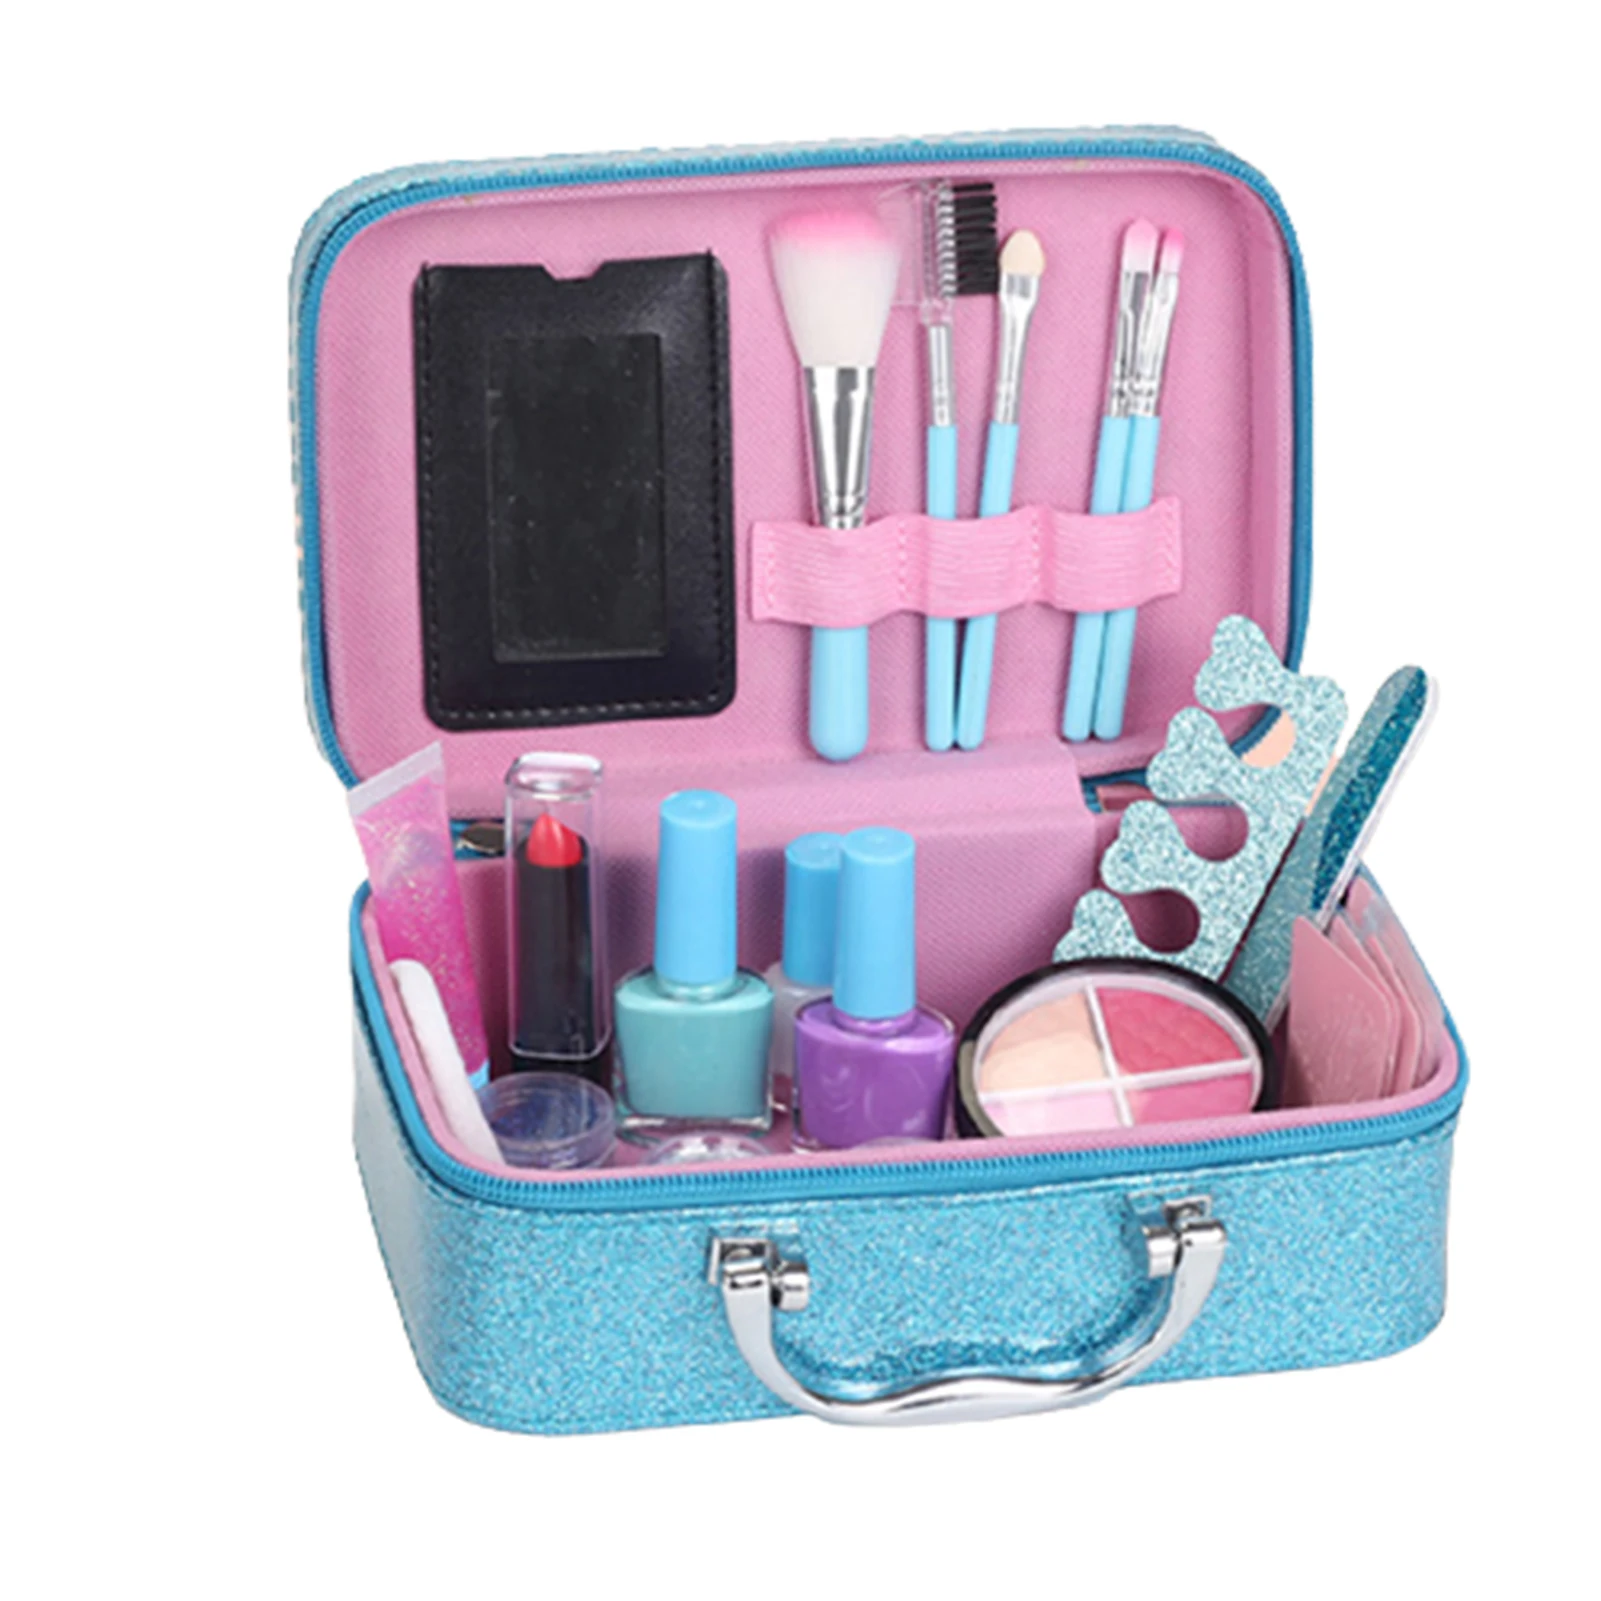 Beauty Kids Cosmetics Makeup Tools Children's Set Beauty Makeup Box Baby Gift Toys Safe Princess Girls Makeup For Girls Birthd